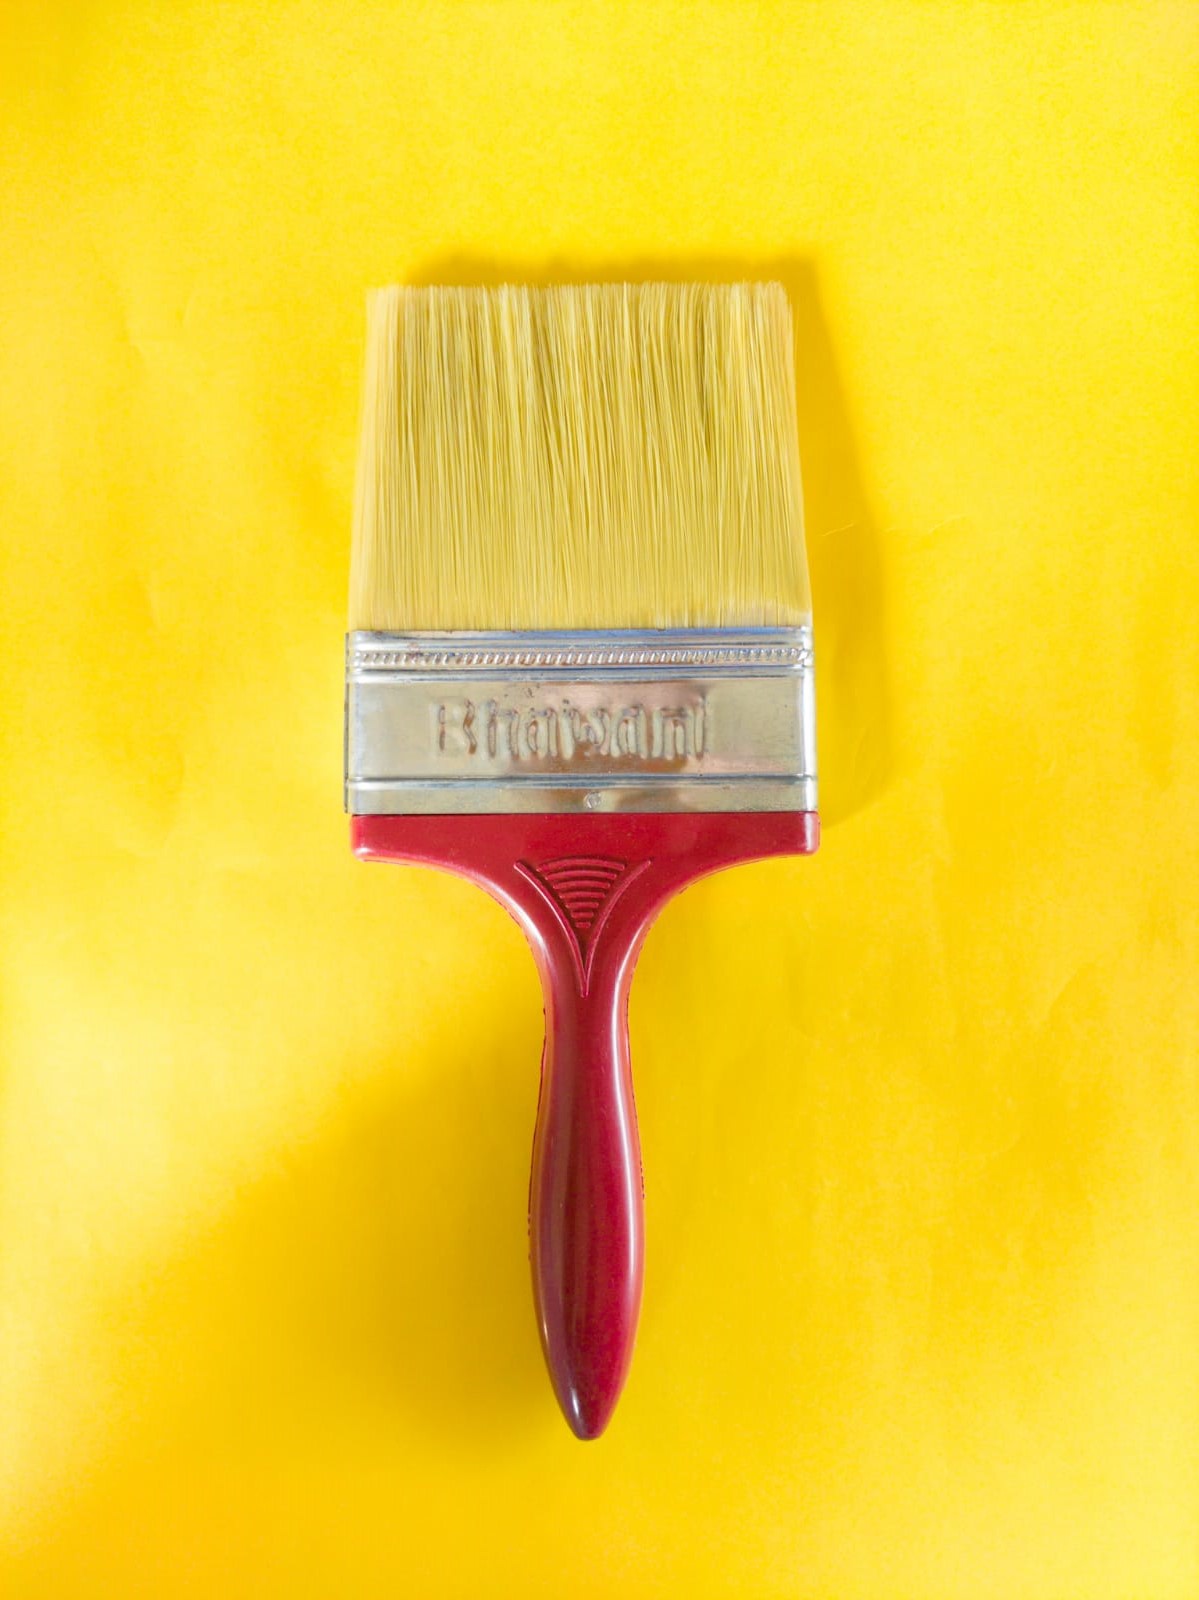 Regular-888-quality-4-inch-paint-brush